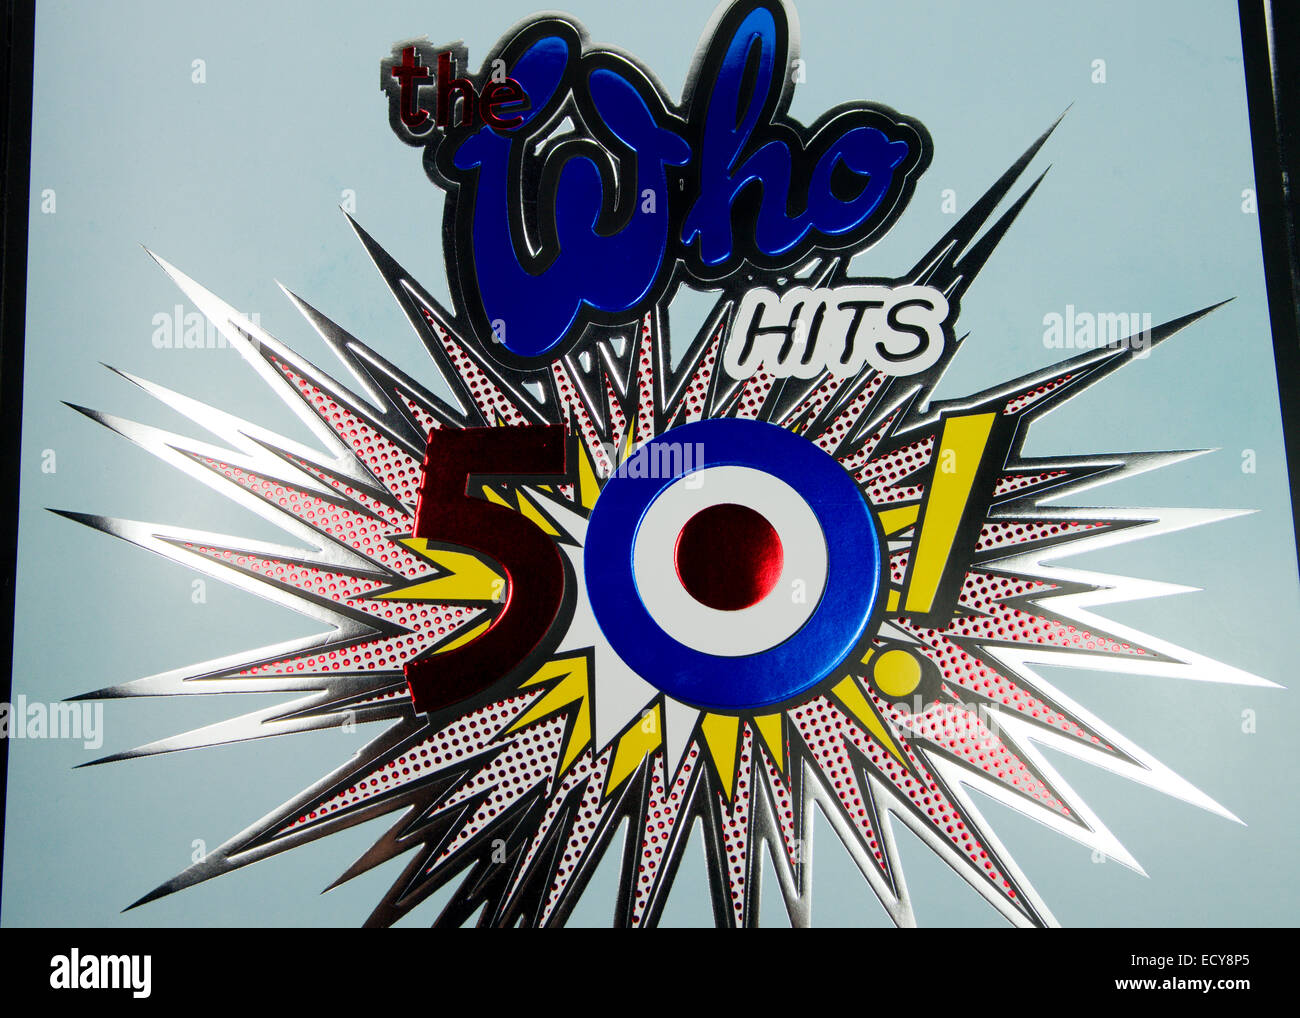 The Who 50 year anniversary tour program Stock Photo